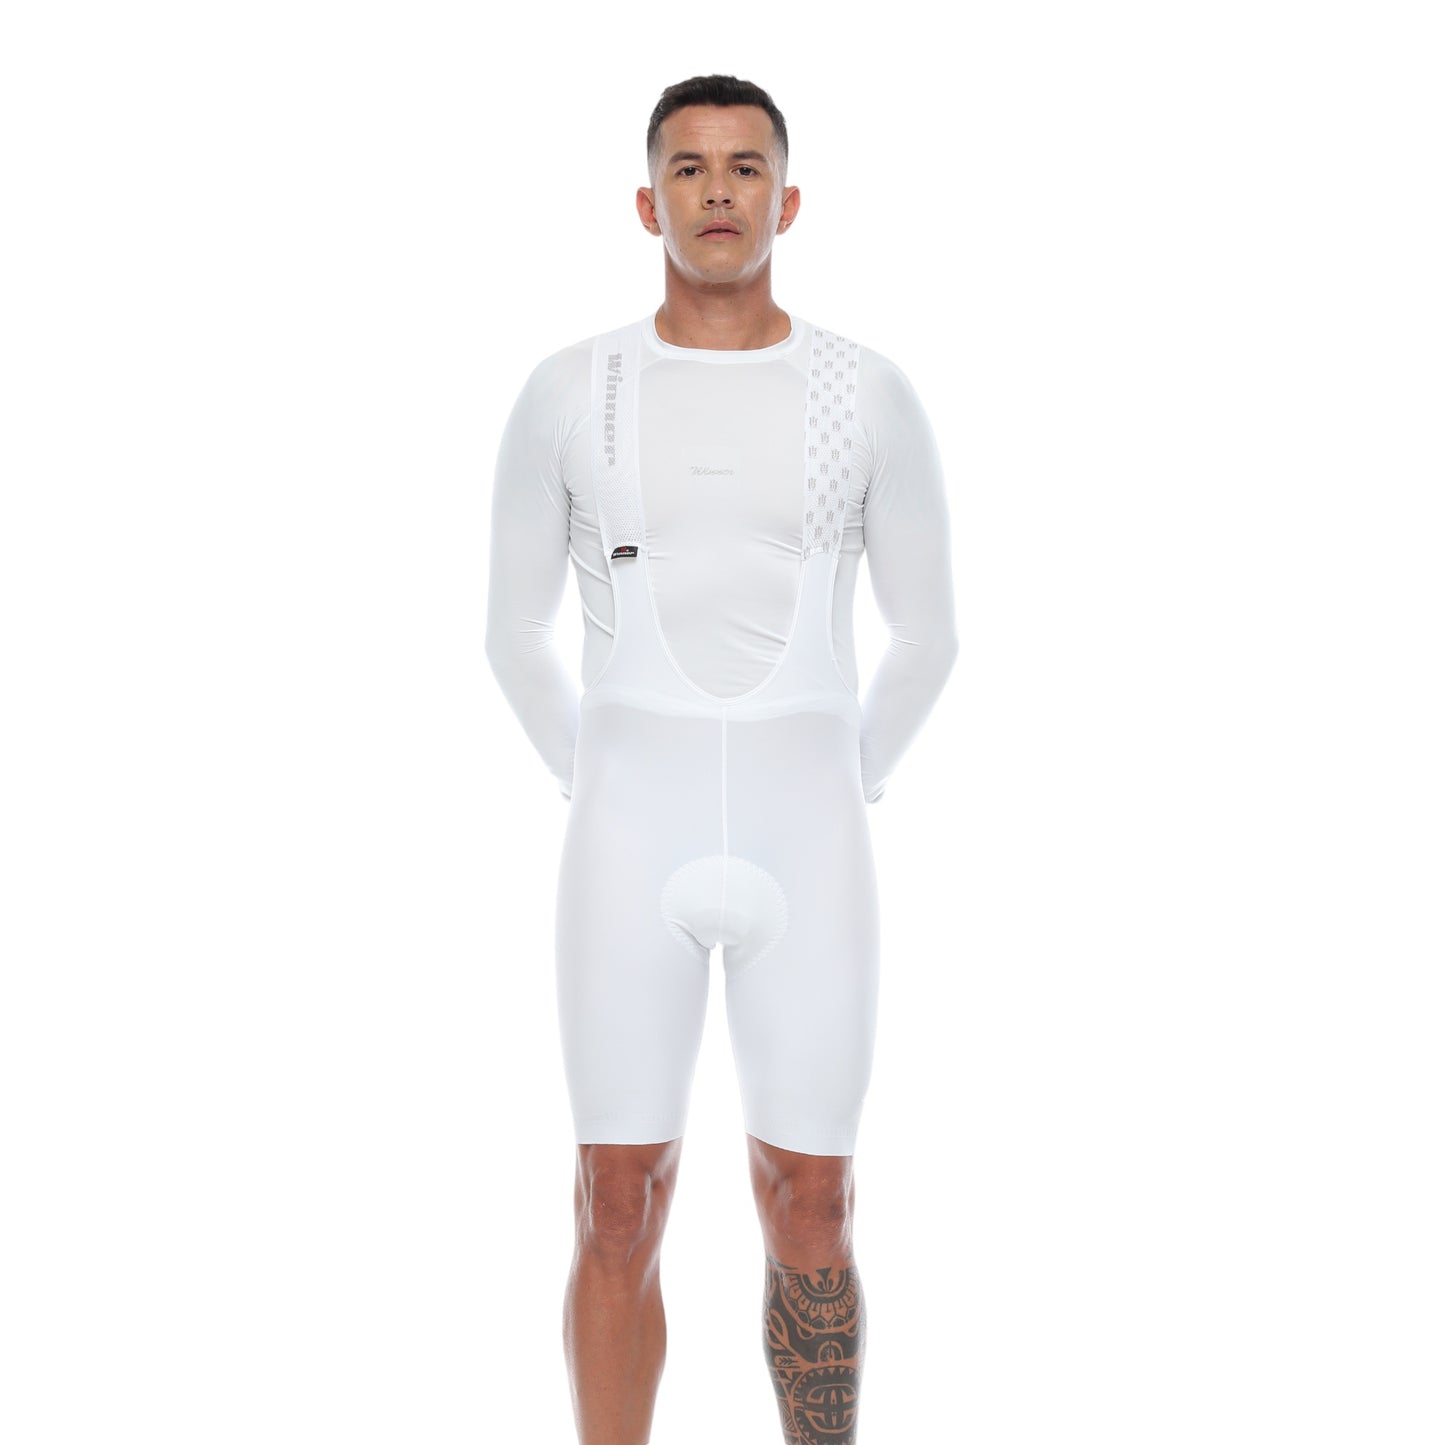 Pantaloneta De Ciclismo Híbrida Masculina Blanca